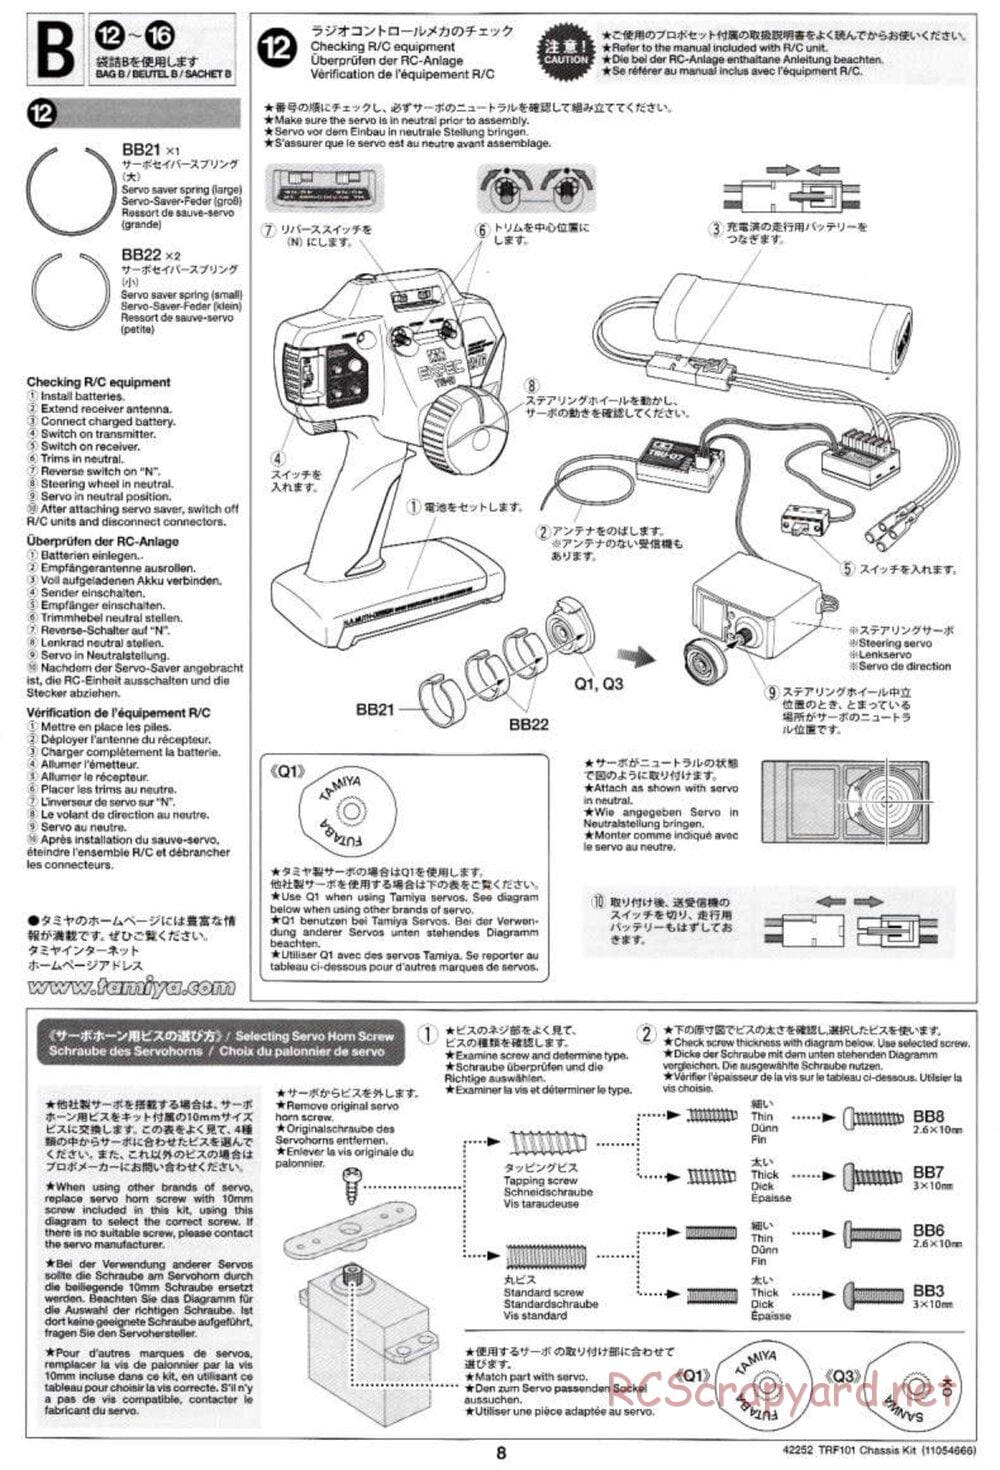 Tamiya - TRF101 Chassis - Manual - Page 8